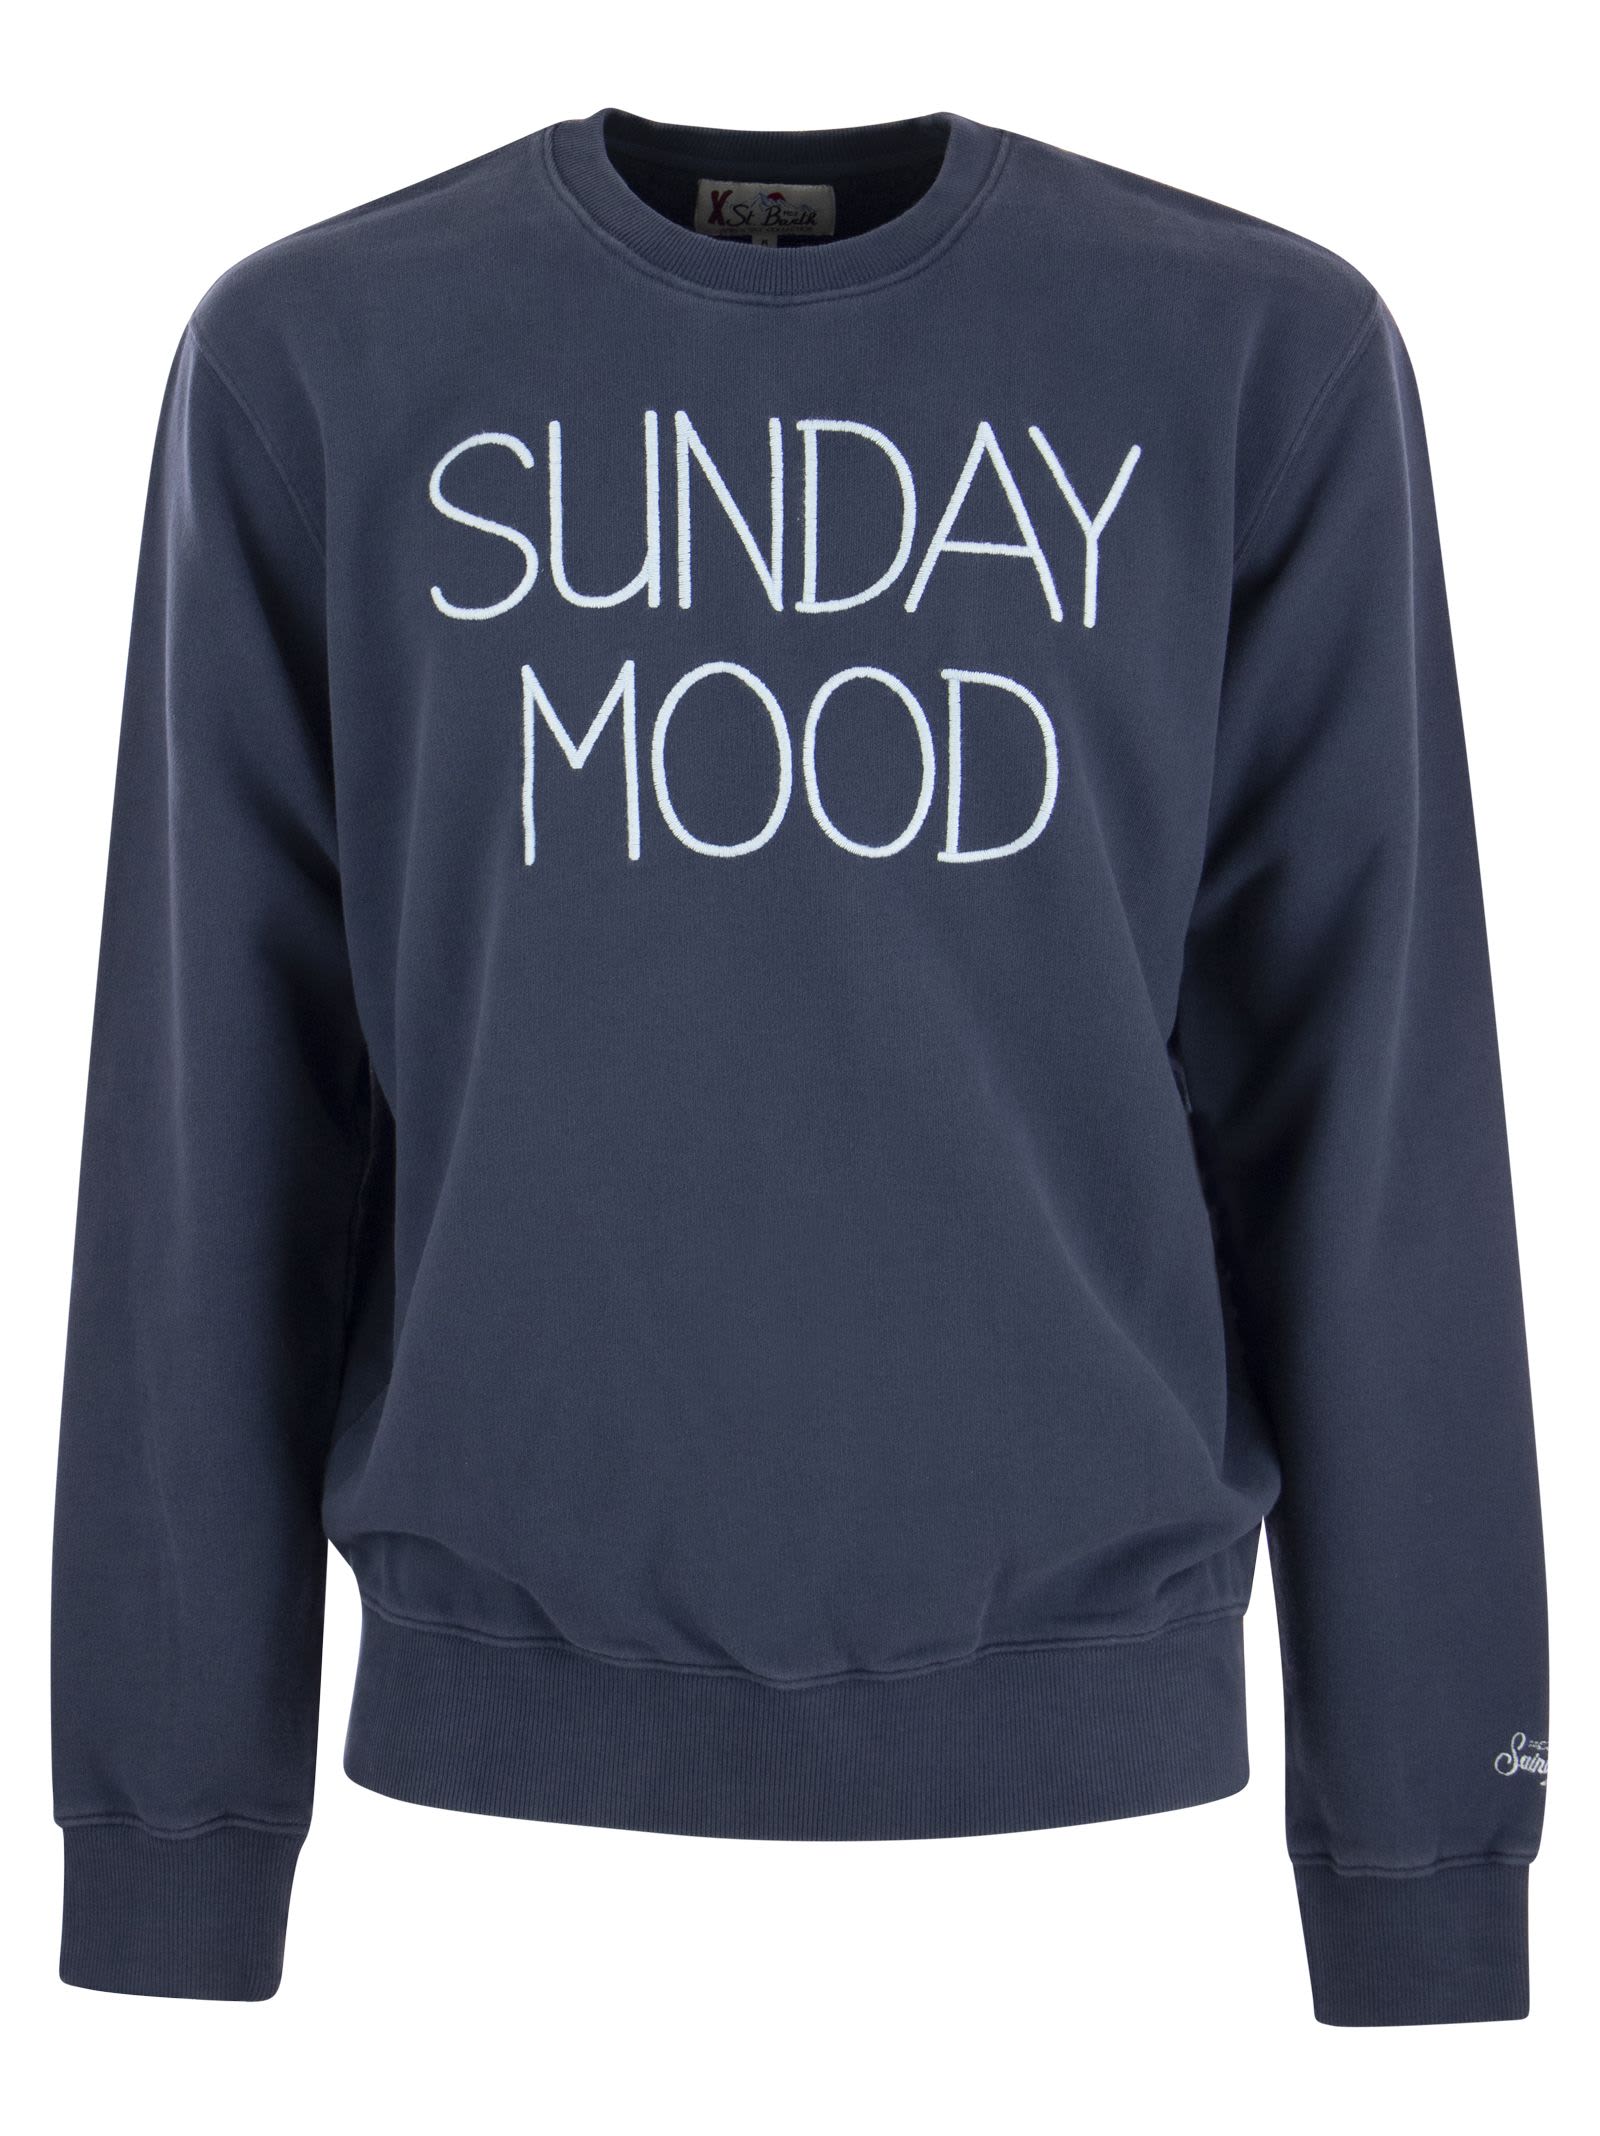 Cotton Sweatshirt With Sunday Mood Lettering